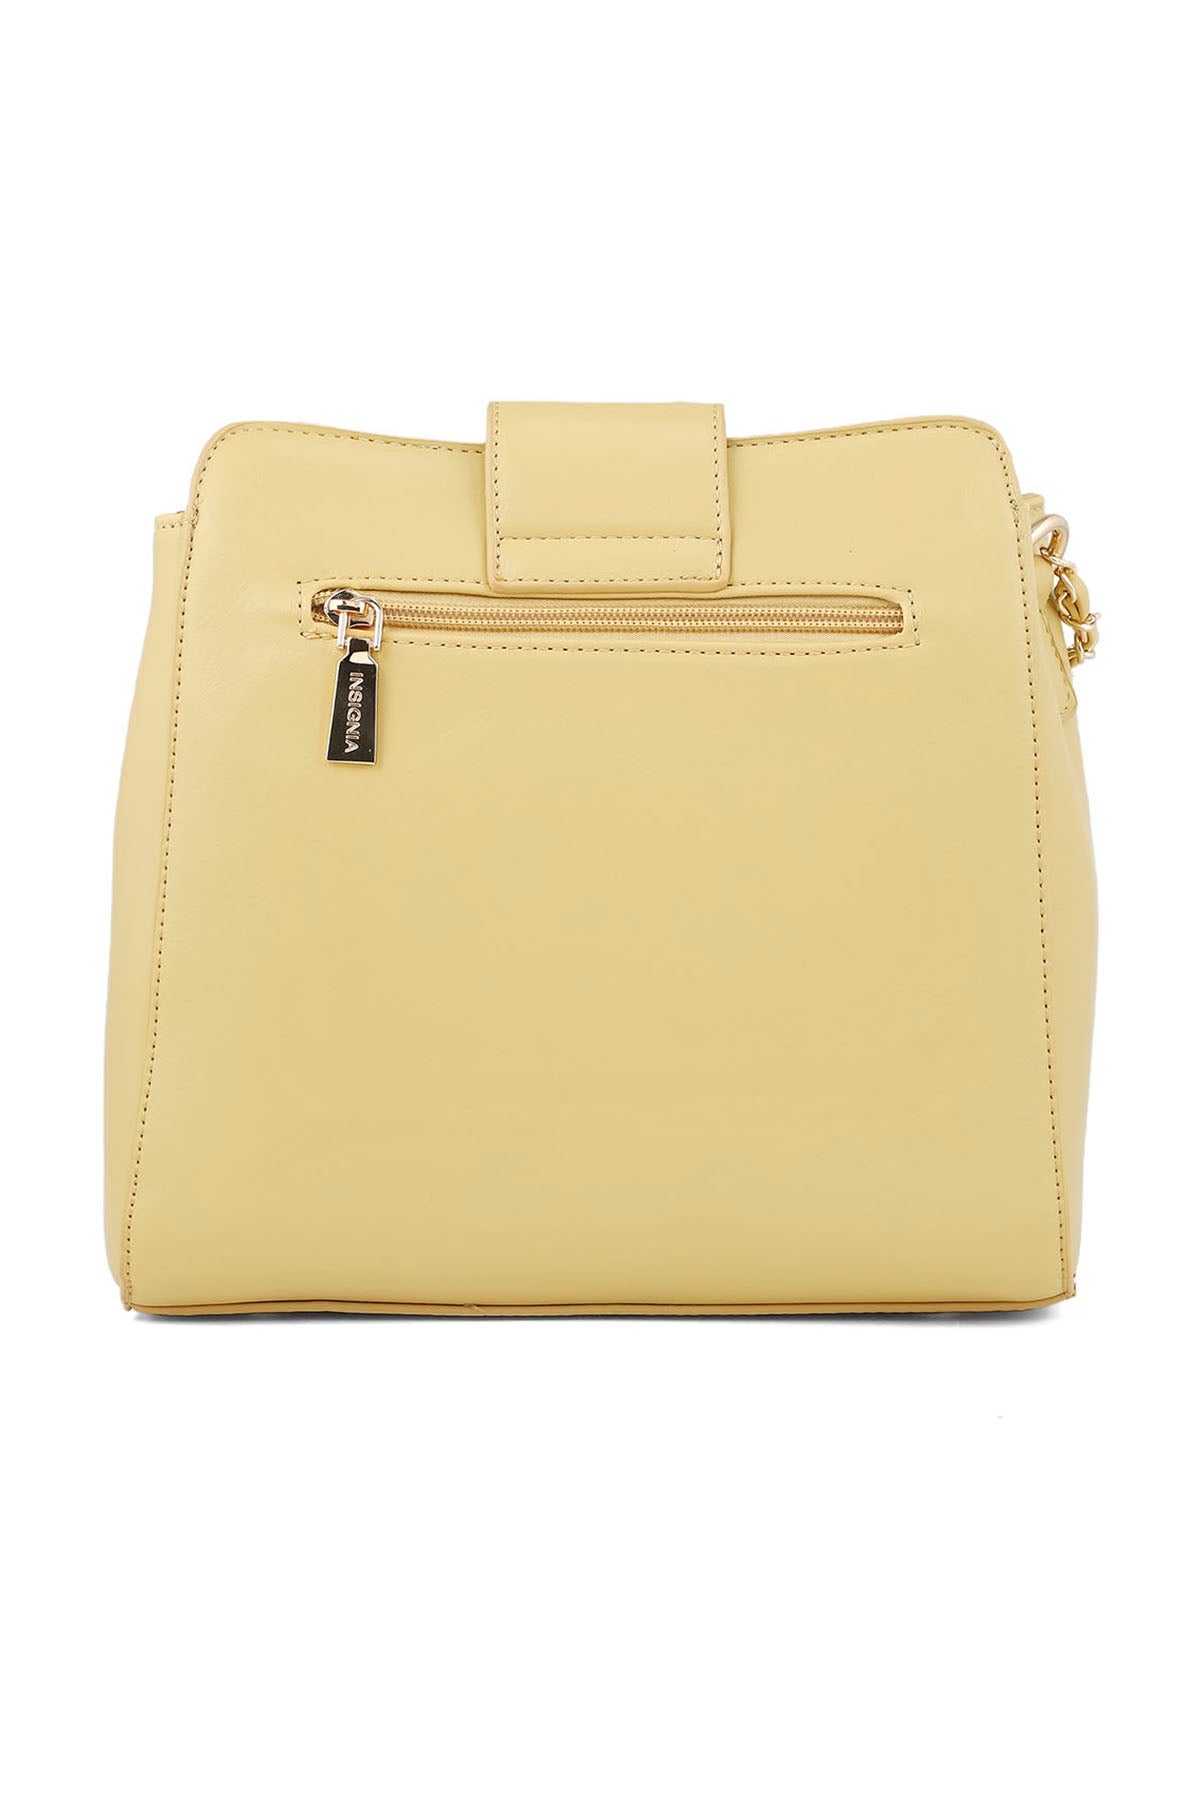 Cross Shoulder Bags B15032-Mustard